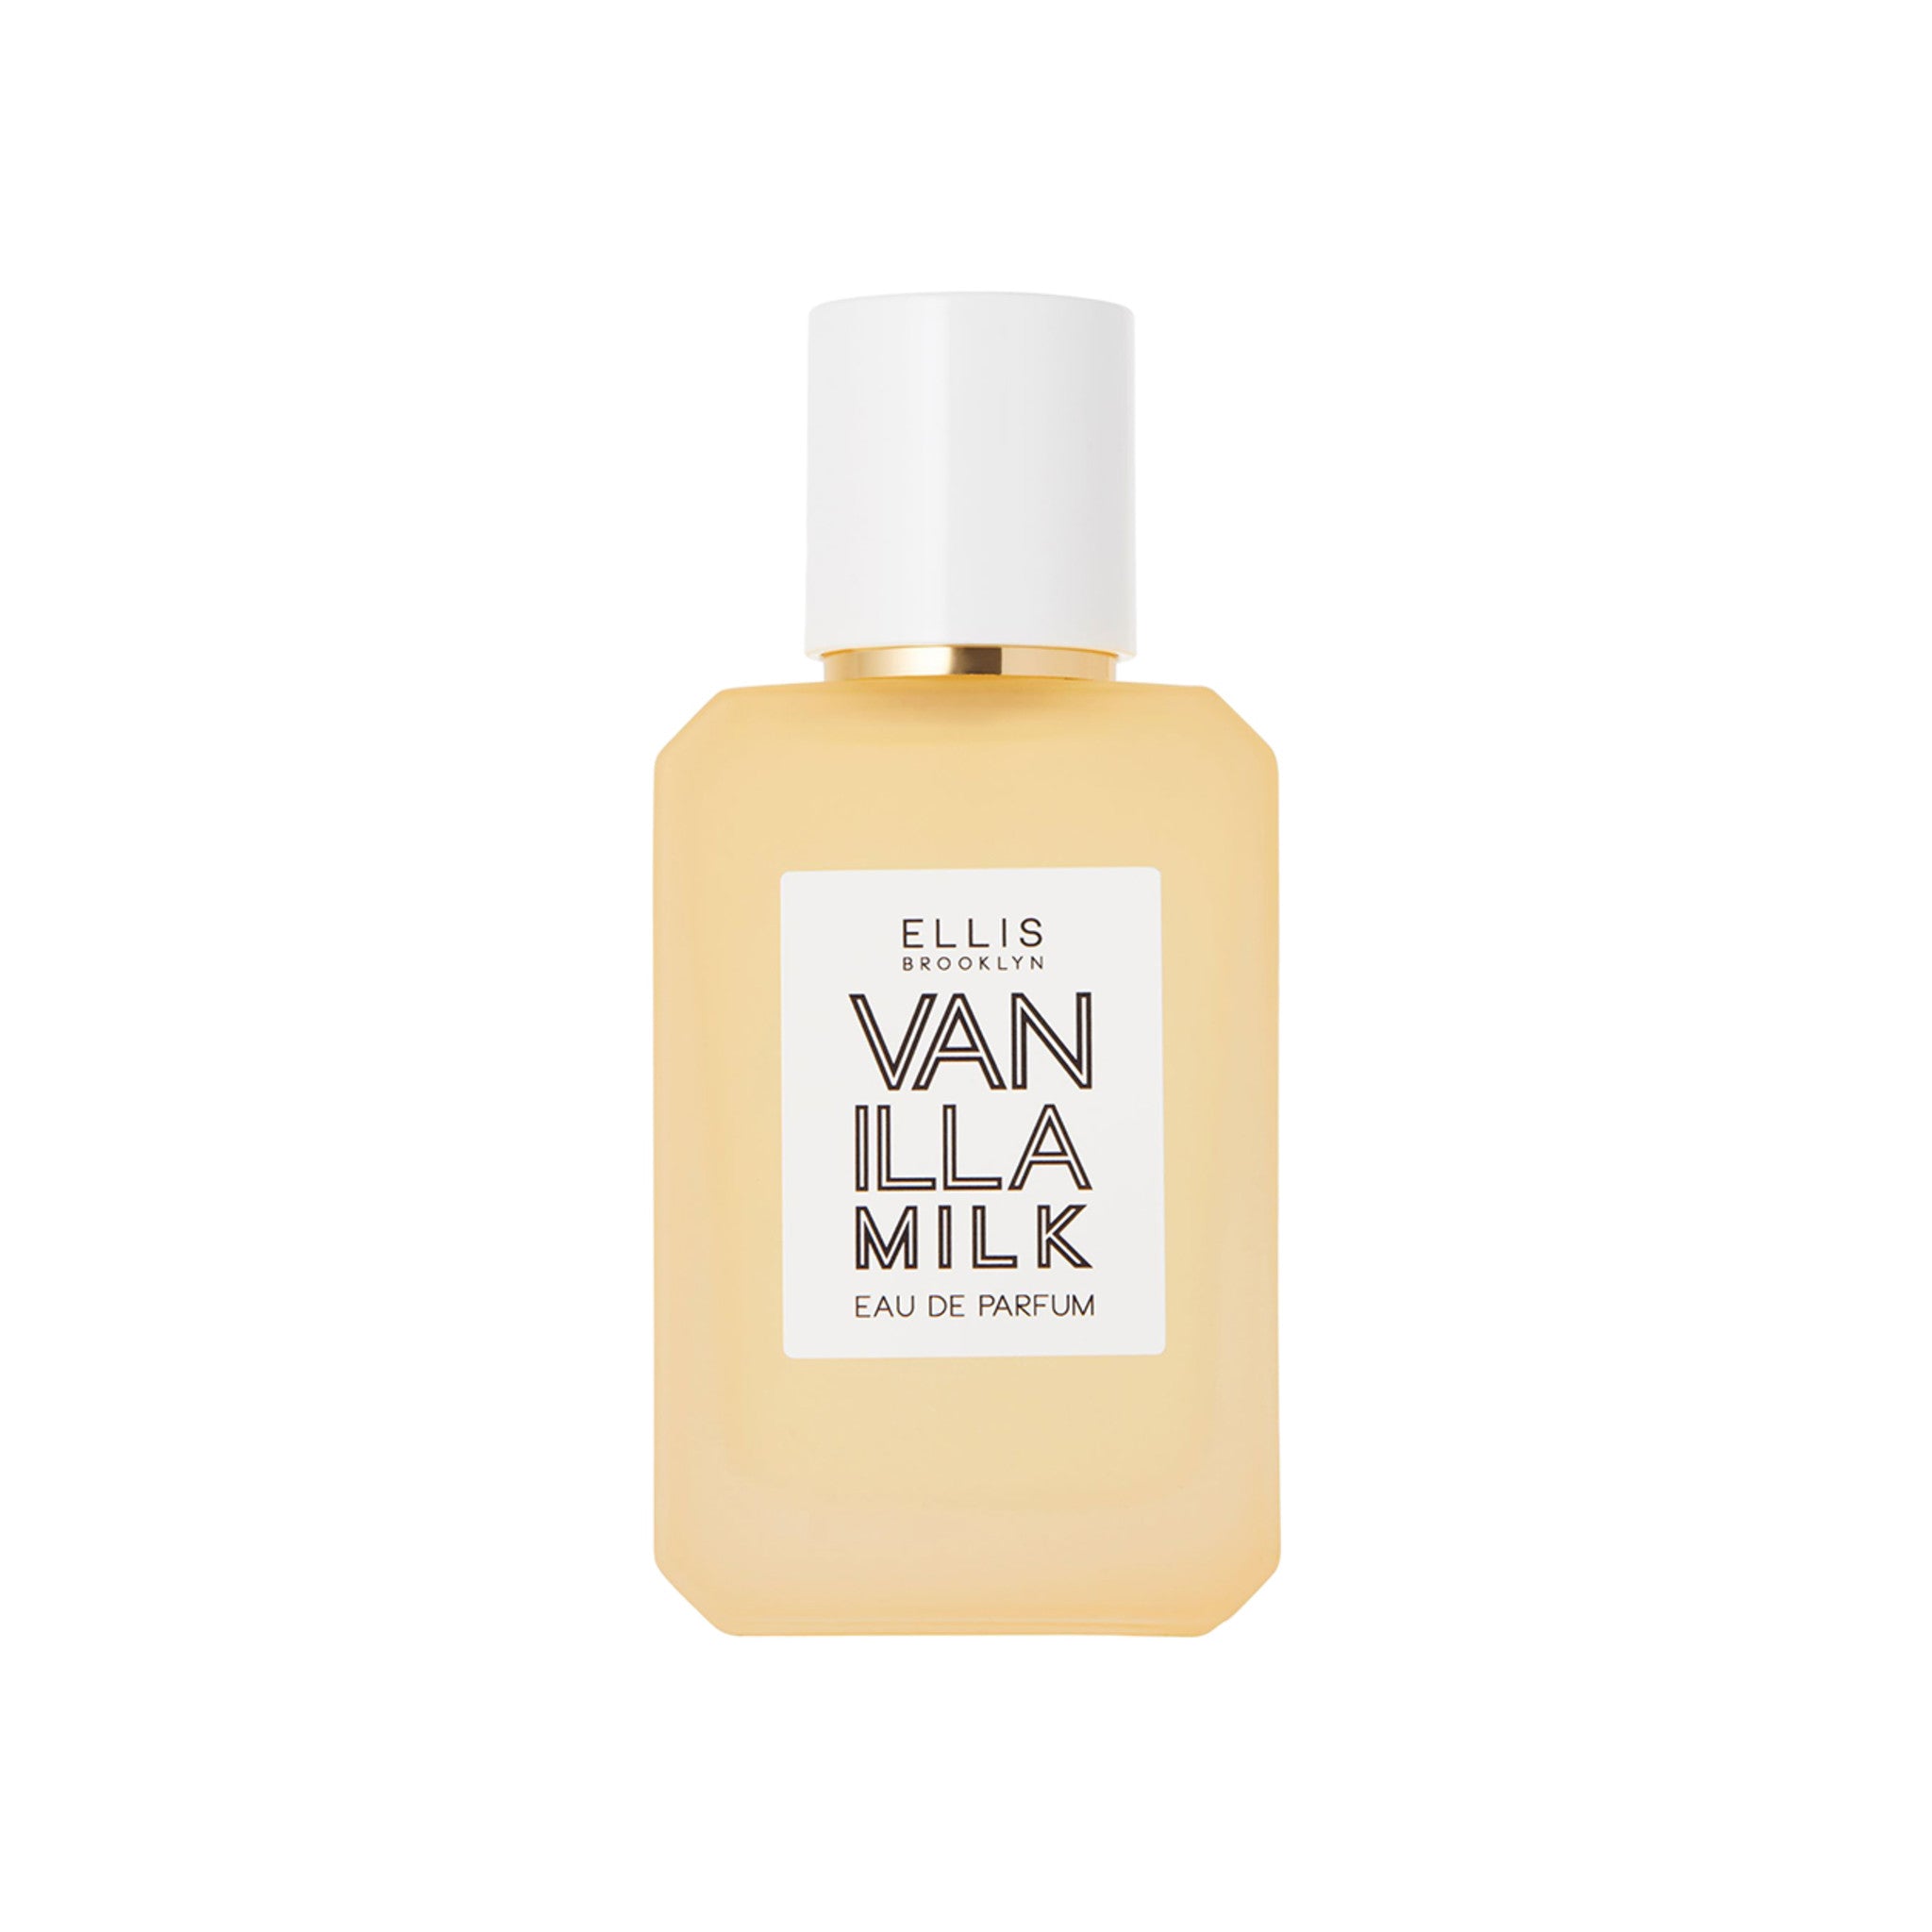 Ellis Brooklyn Vanilla Milk Eau de Parfum Size variant: 1.7 fl oz | 50 ml main image.